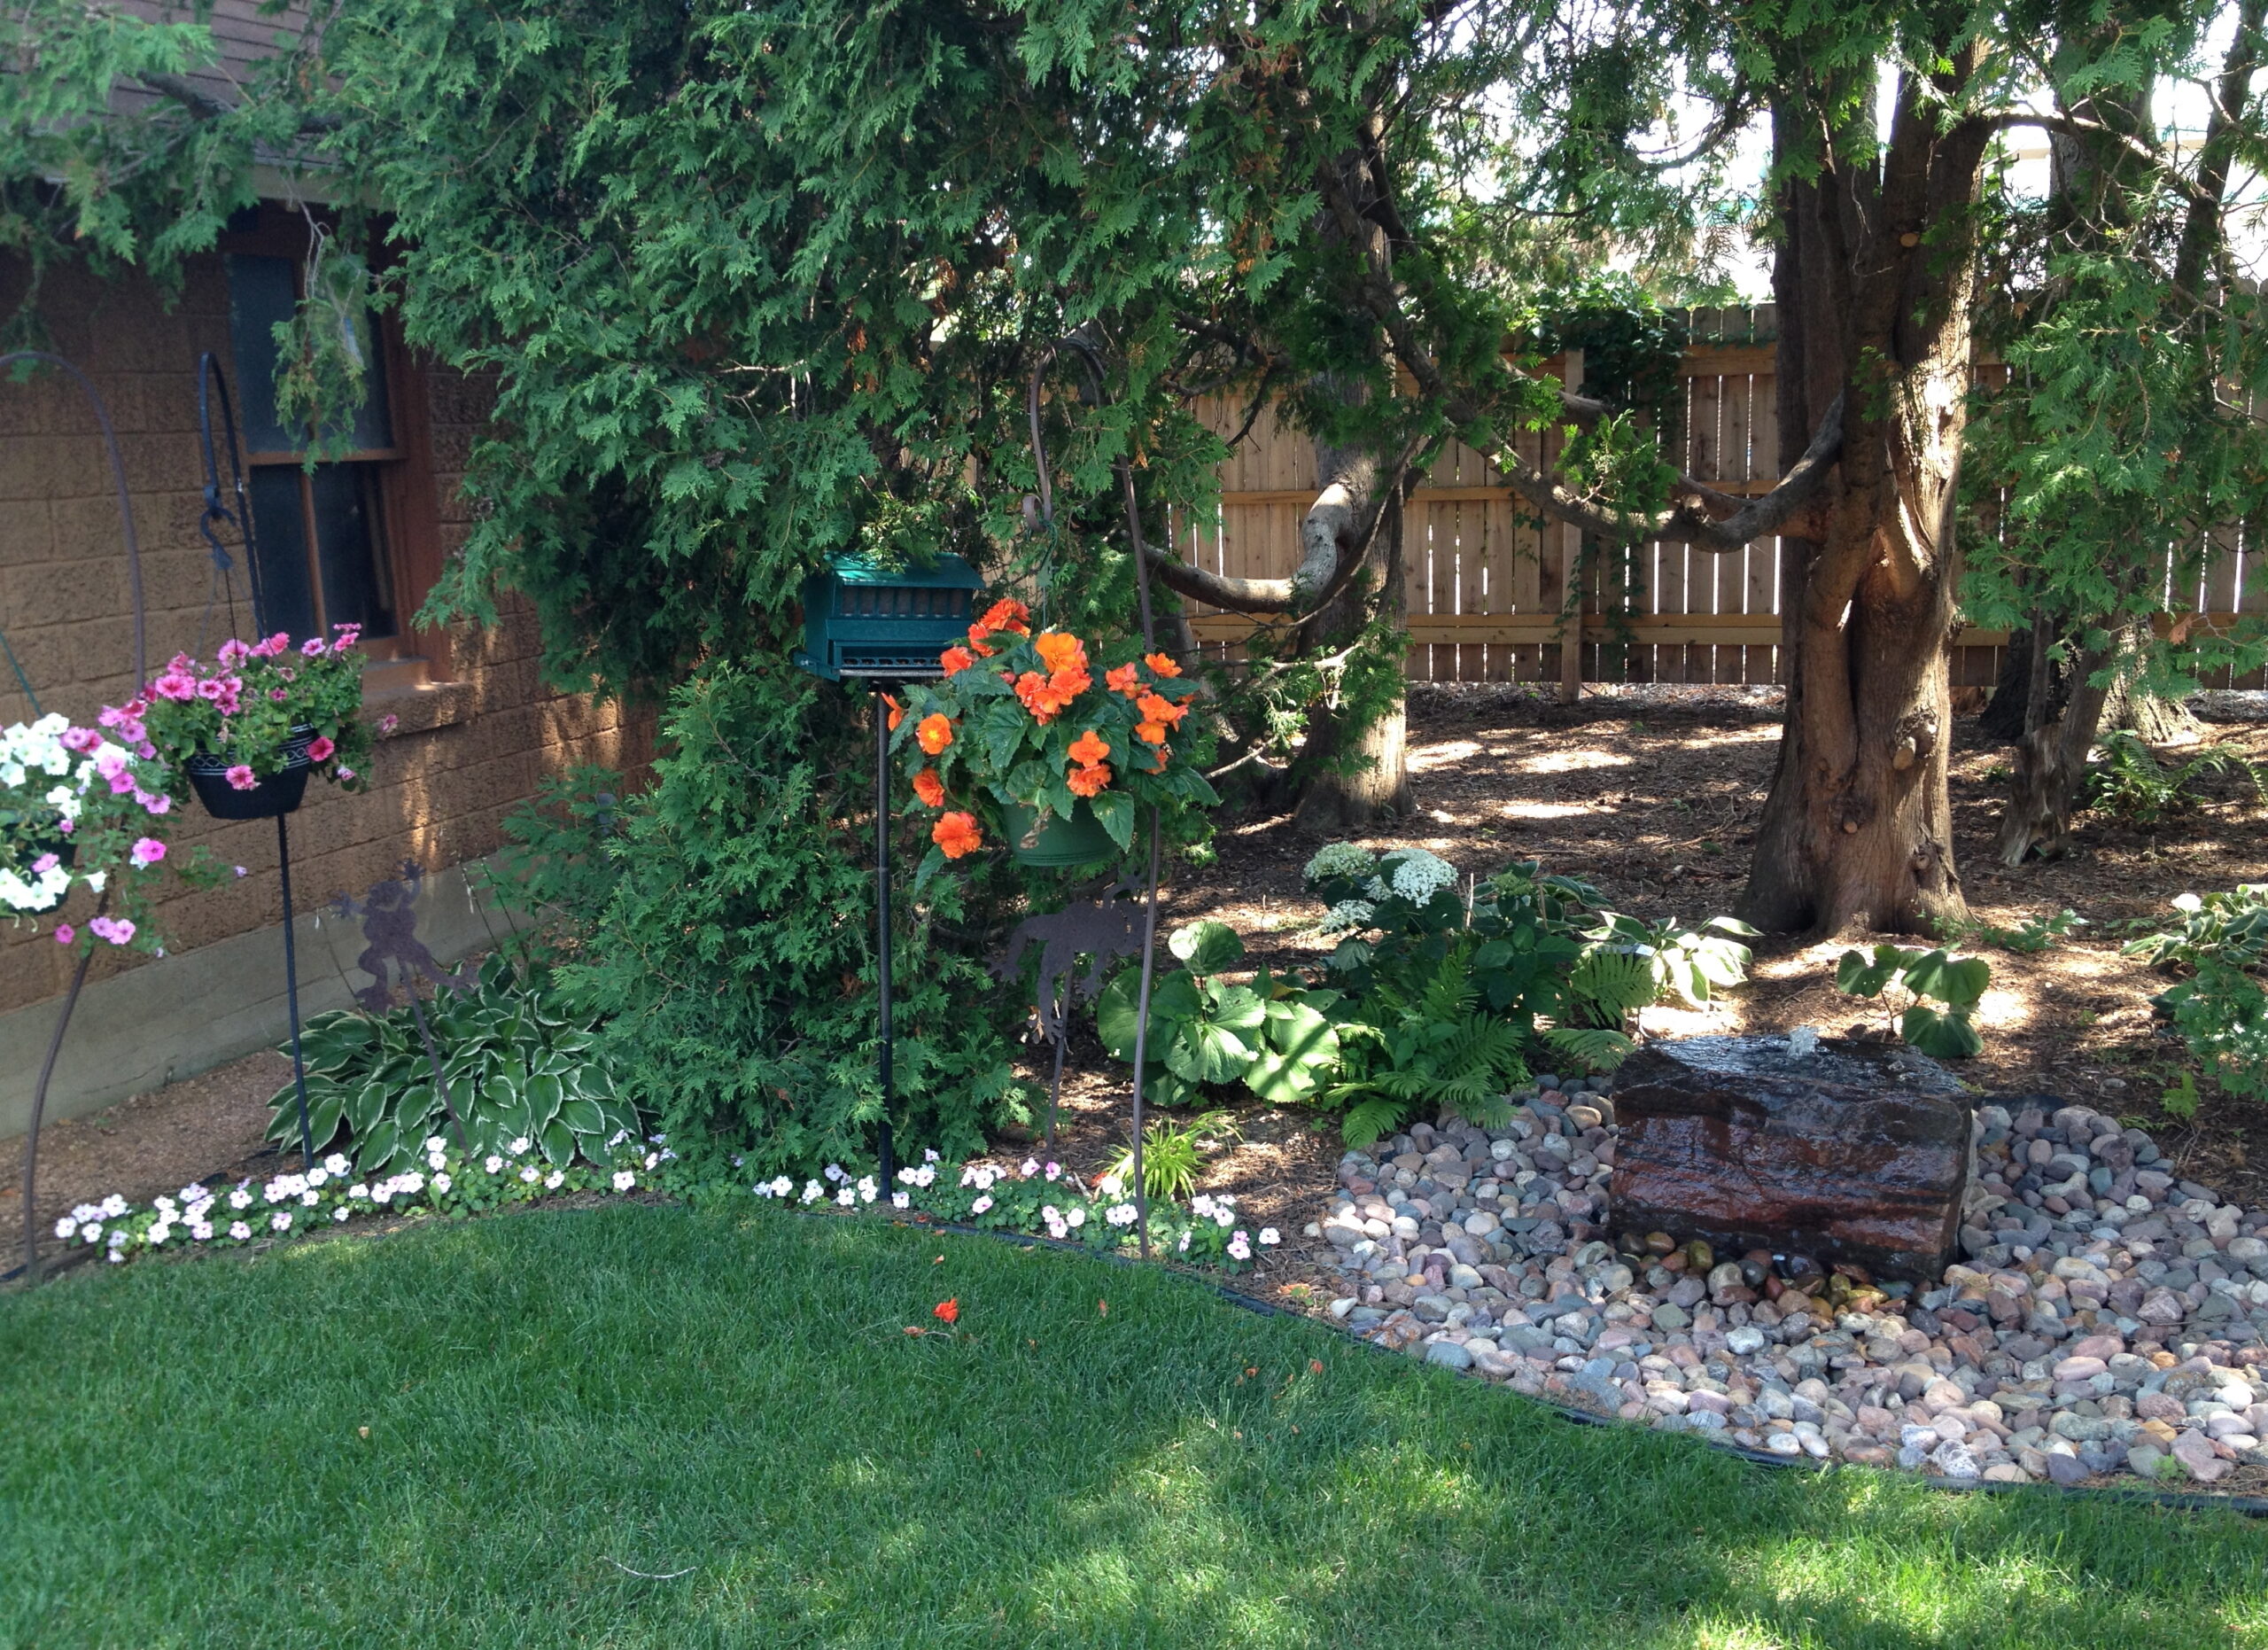 Four Backyard Patio Ideas for Your Home